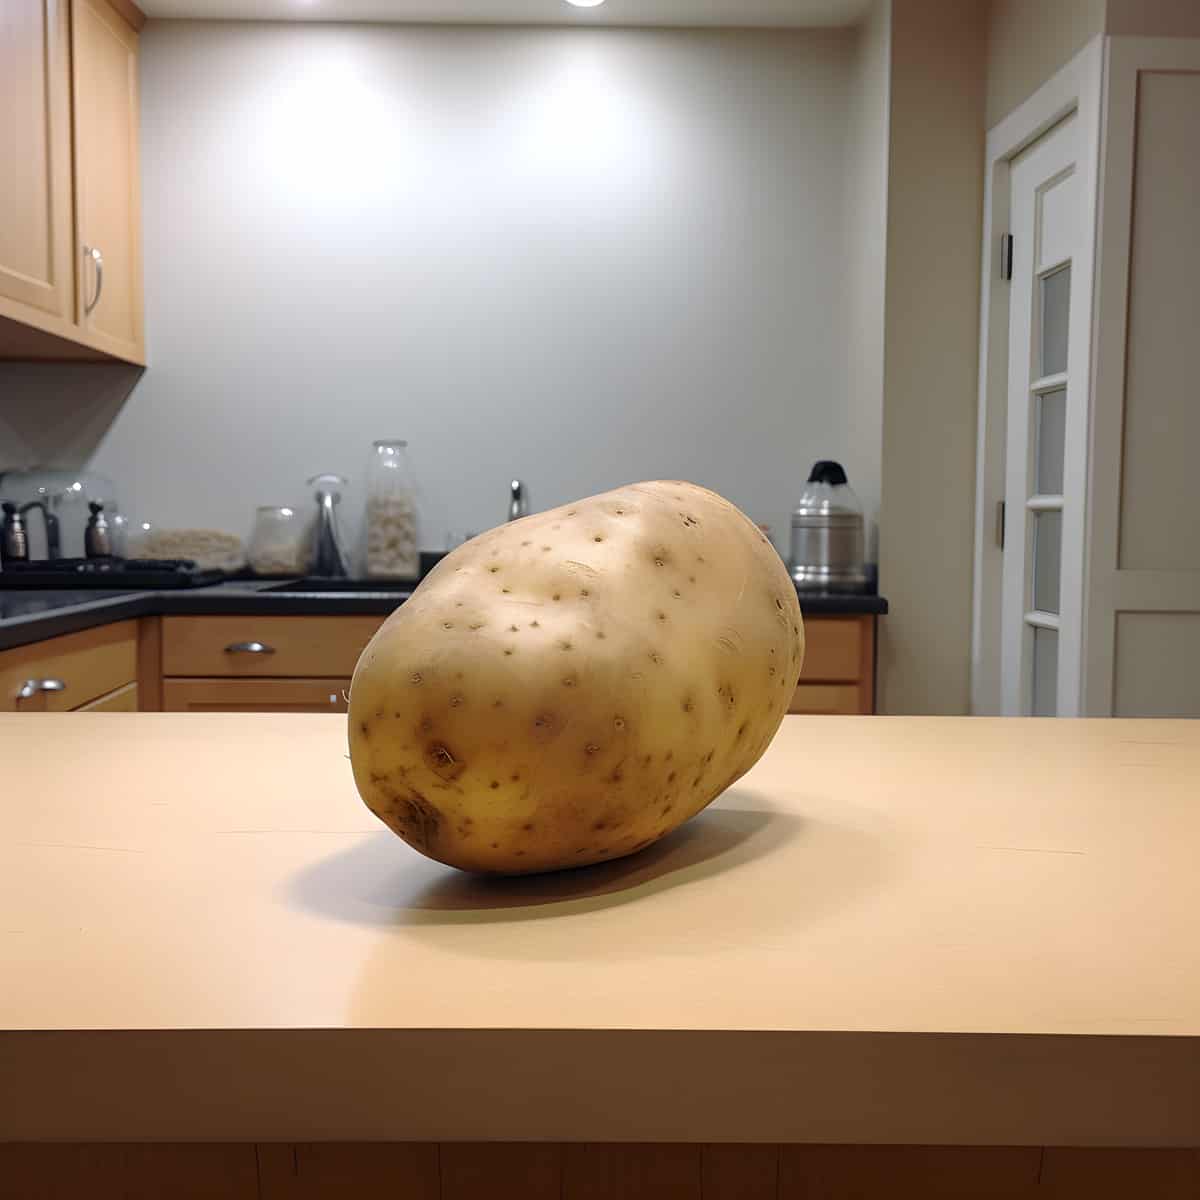 Quarta Potatoes on a kitchen counter